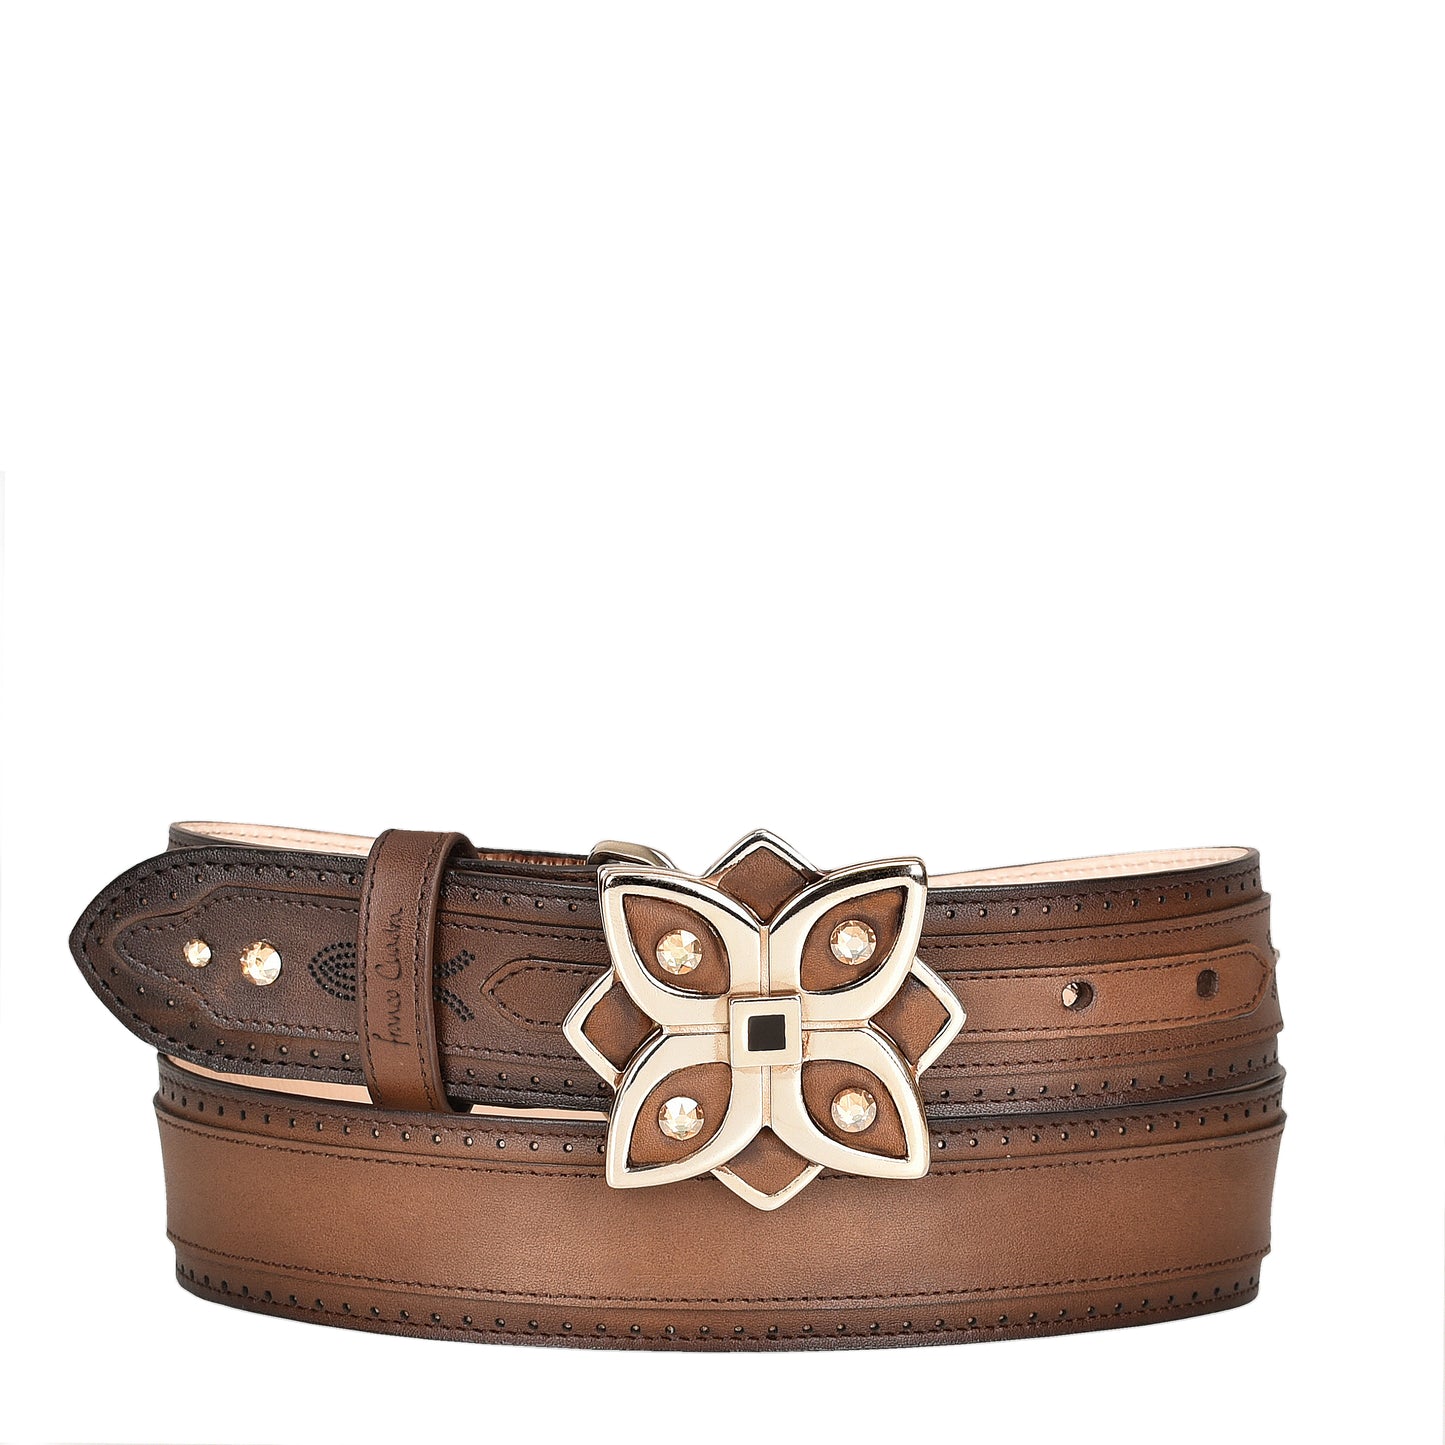 Franco Cuadra honey leather belt